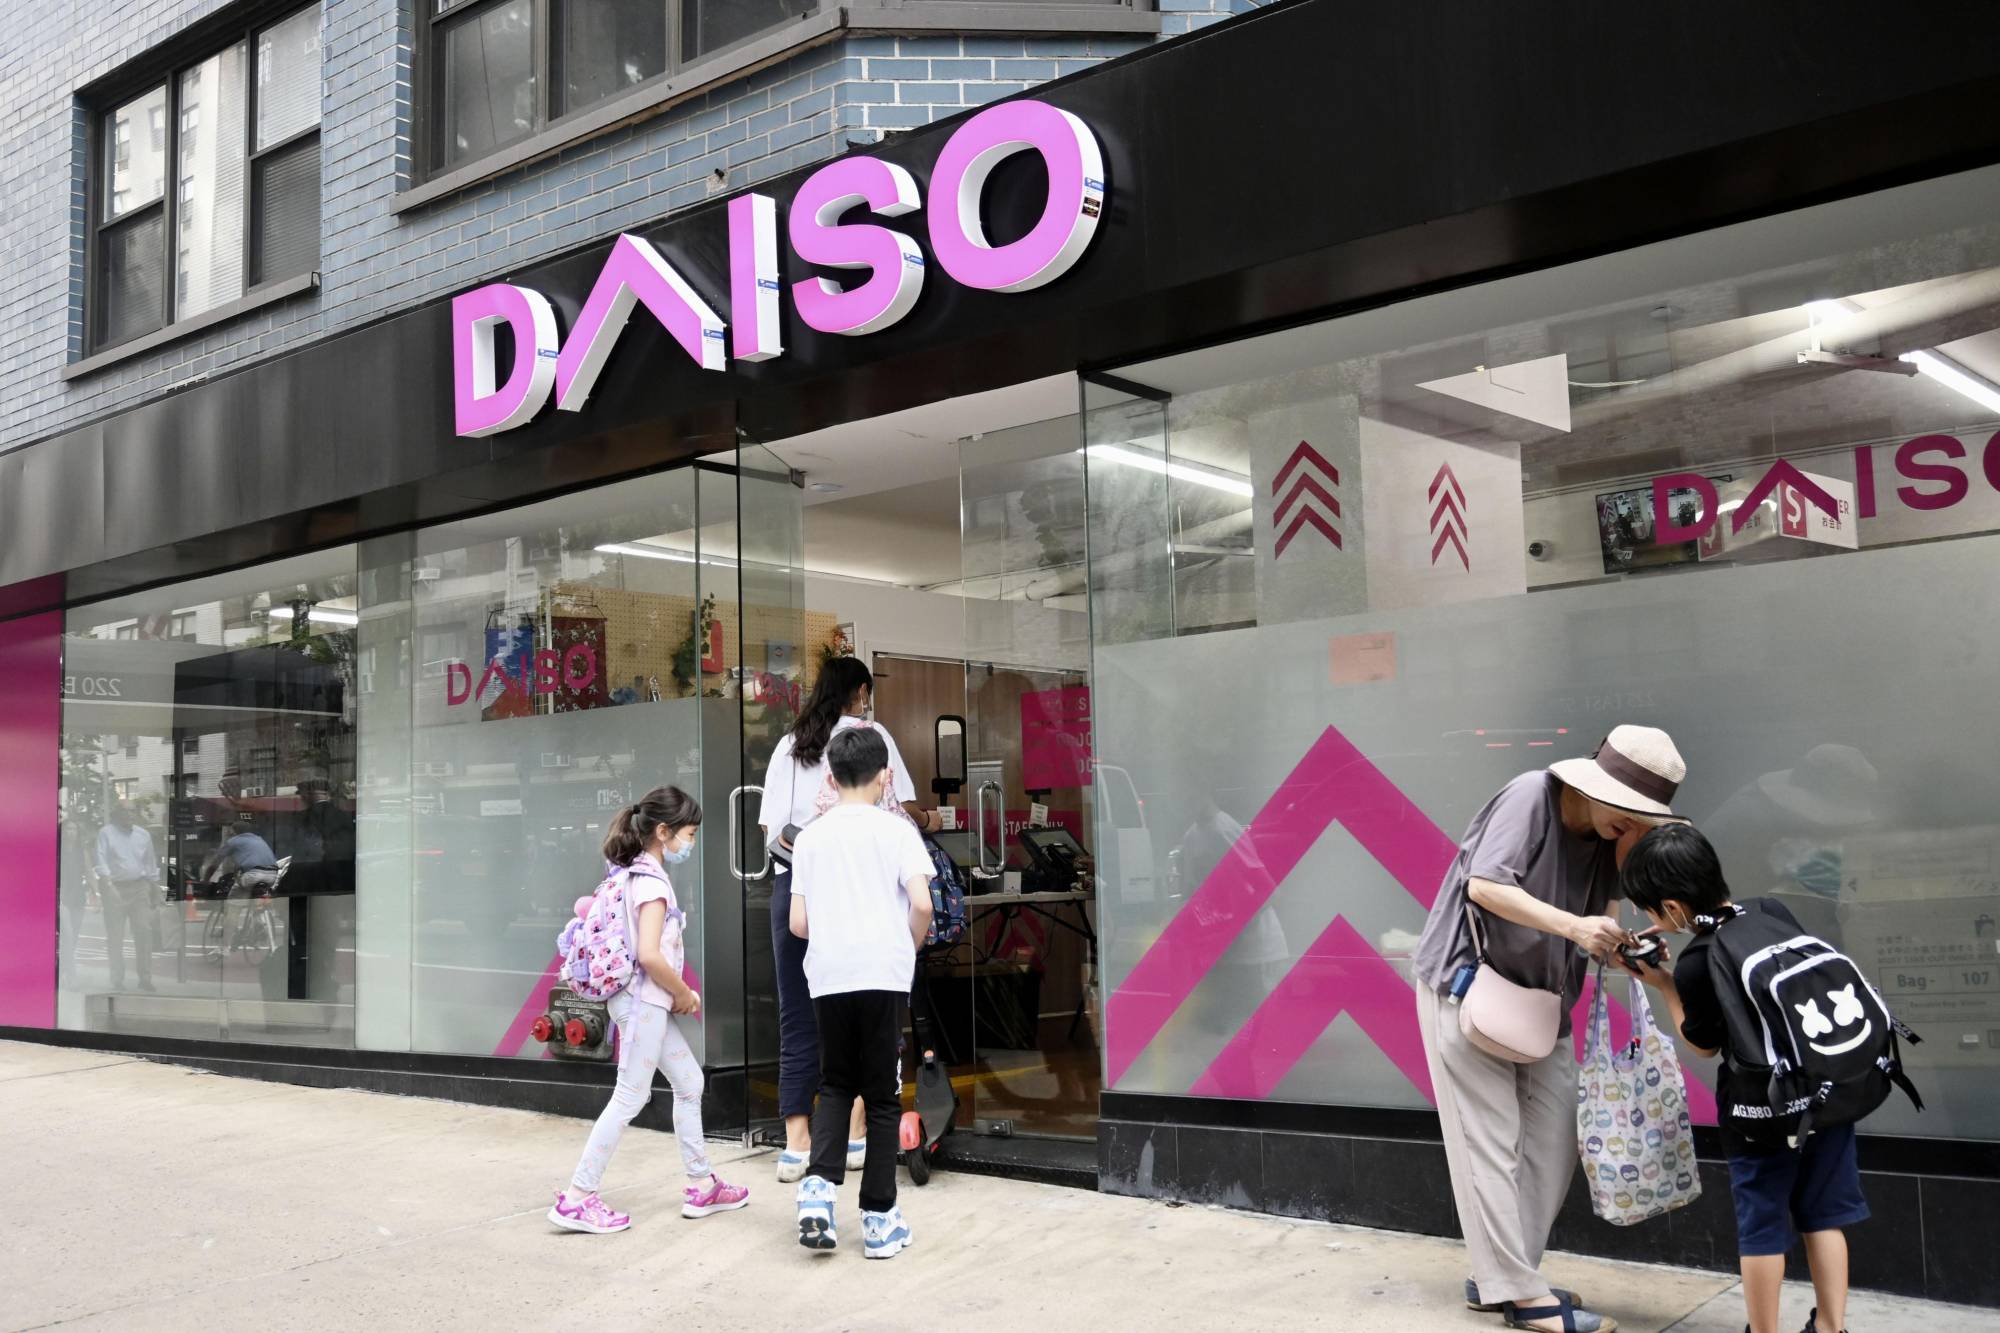 Daiso value retailer aims to increase U.S. stores 10-fold - The